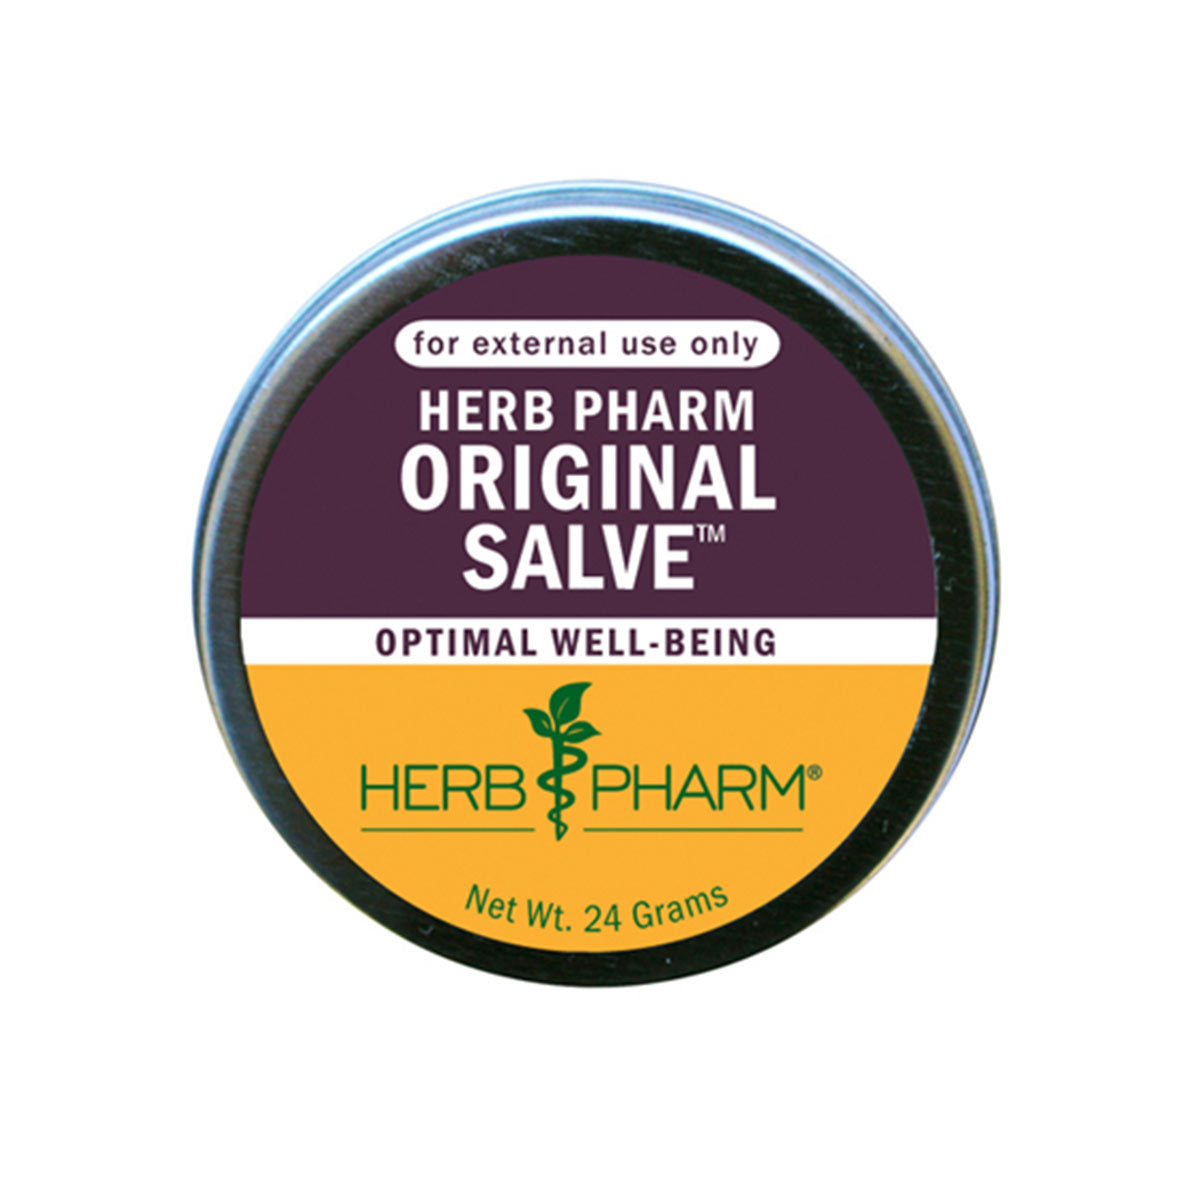 Primary image of Herb Pharm Original Salve